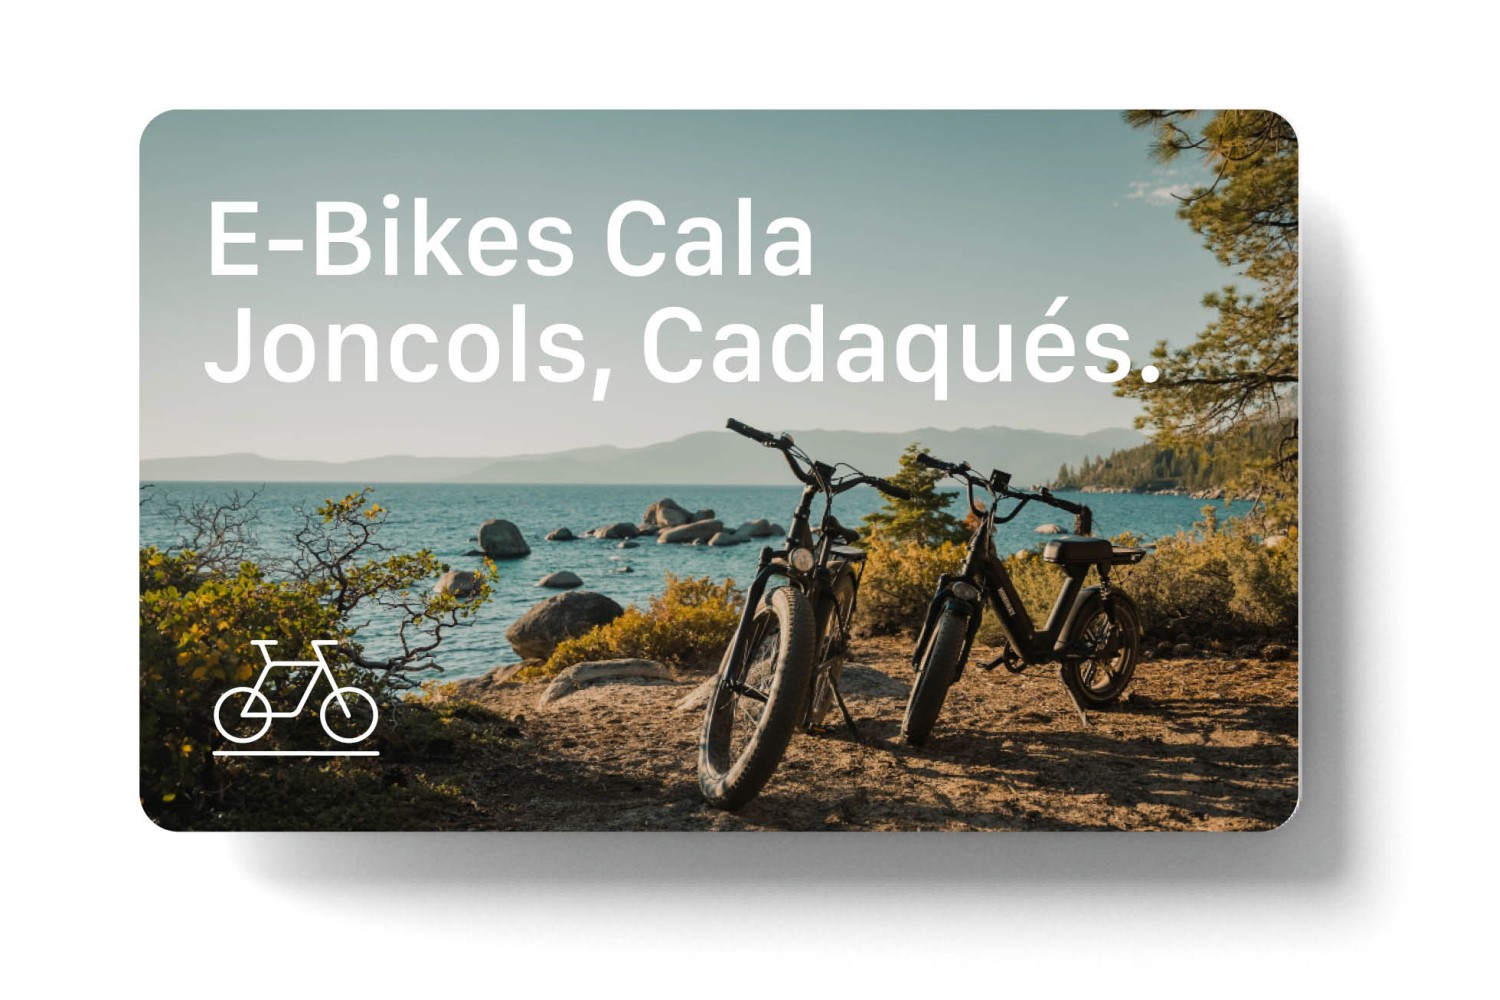 E-Bike route through Cala Joncols